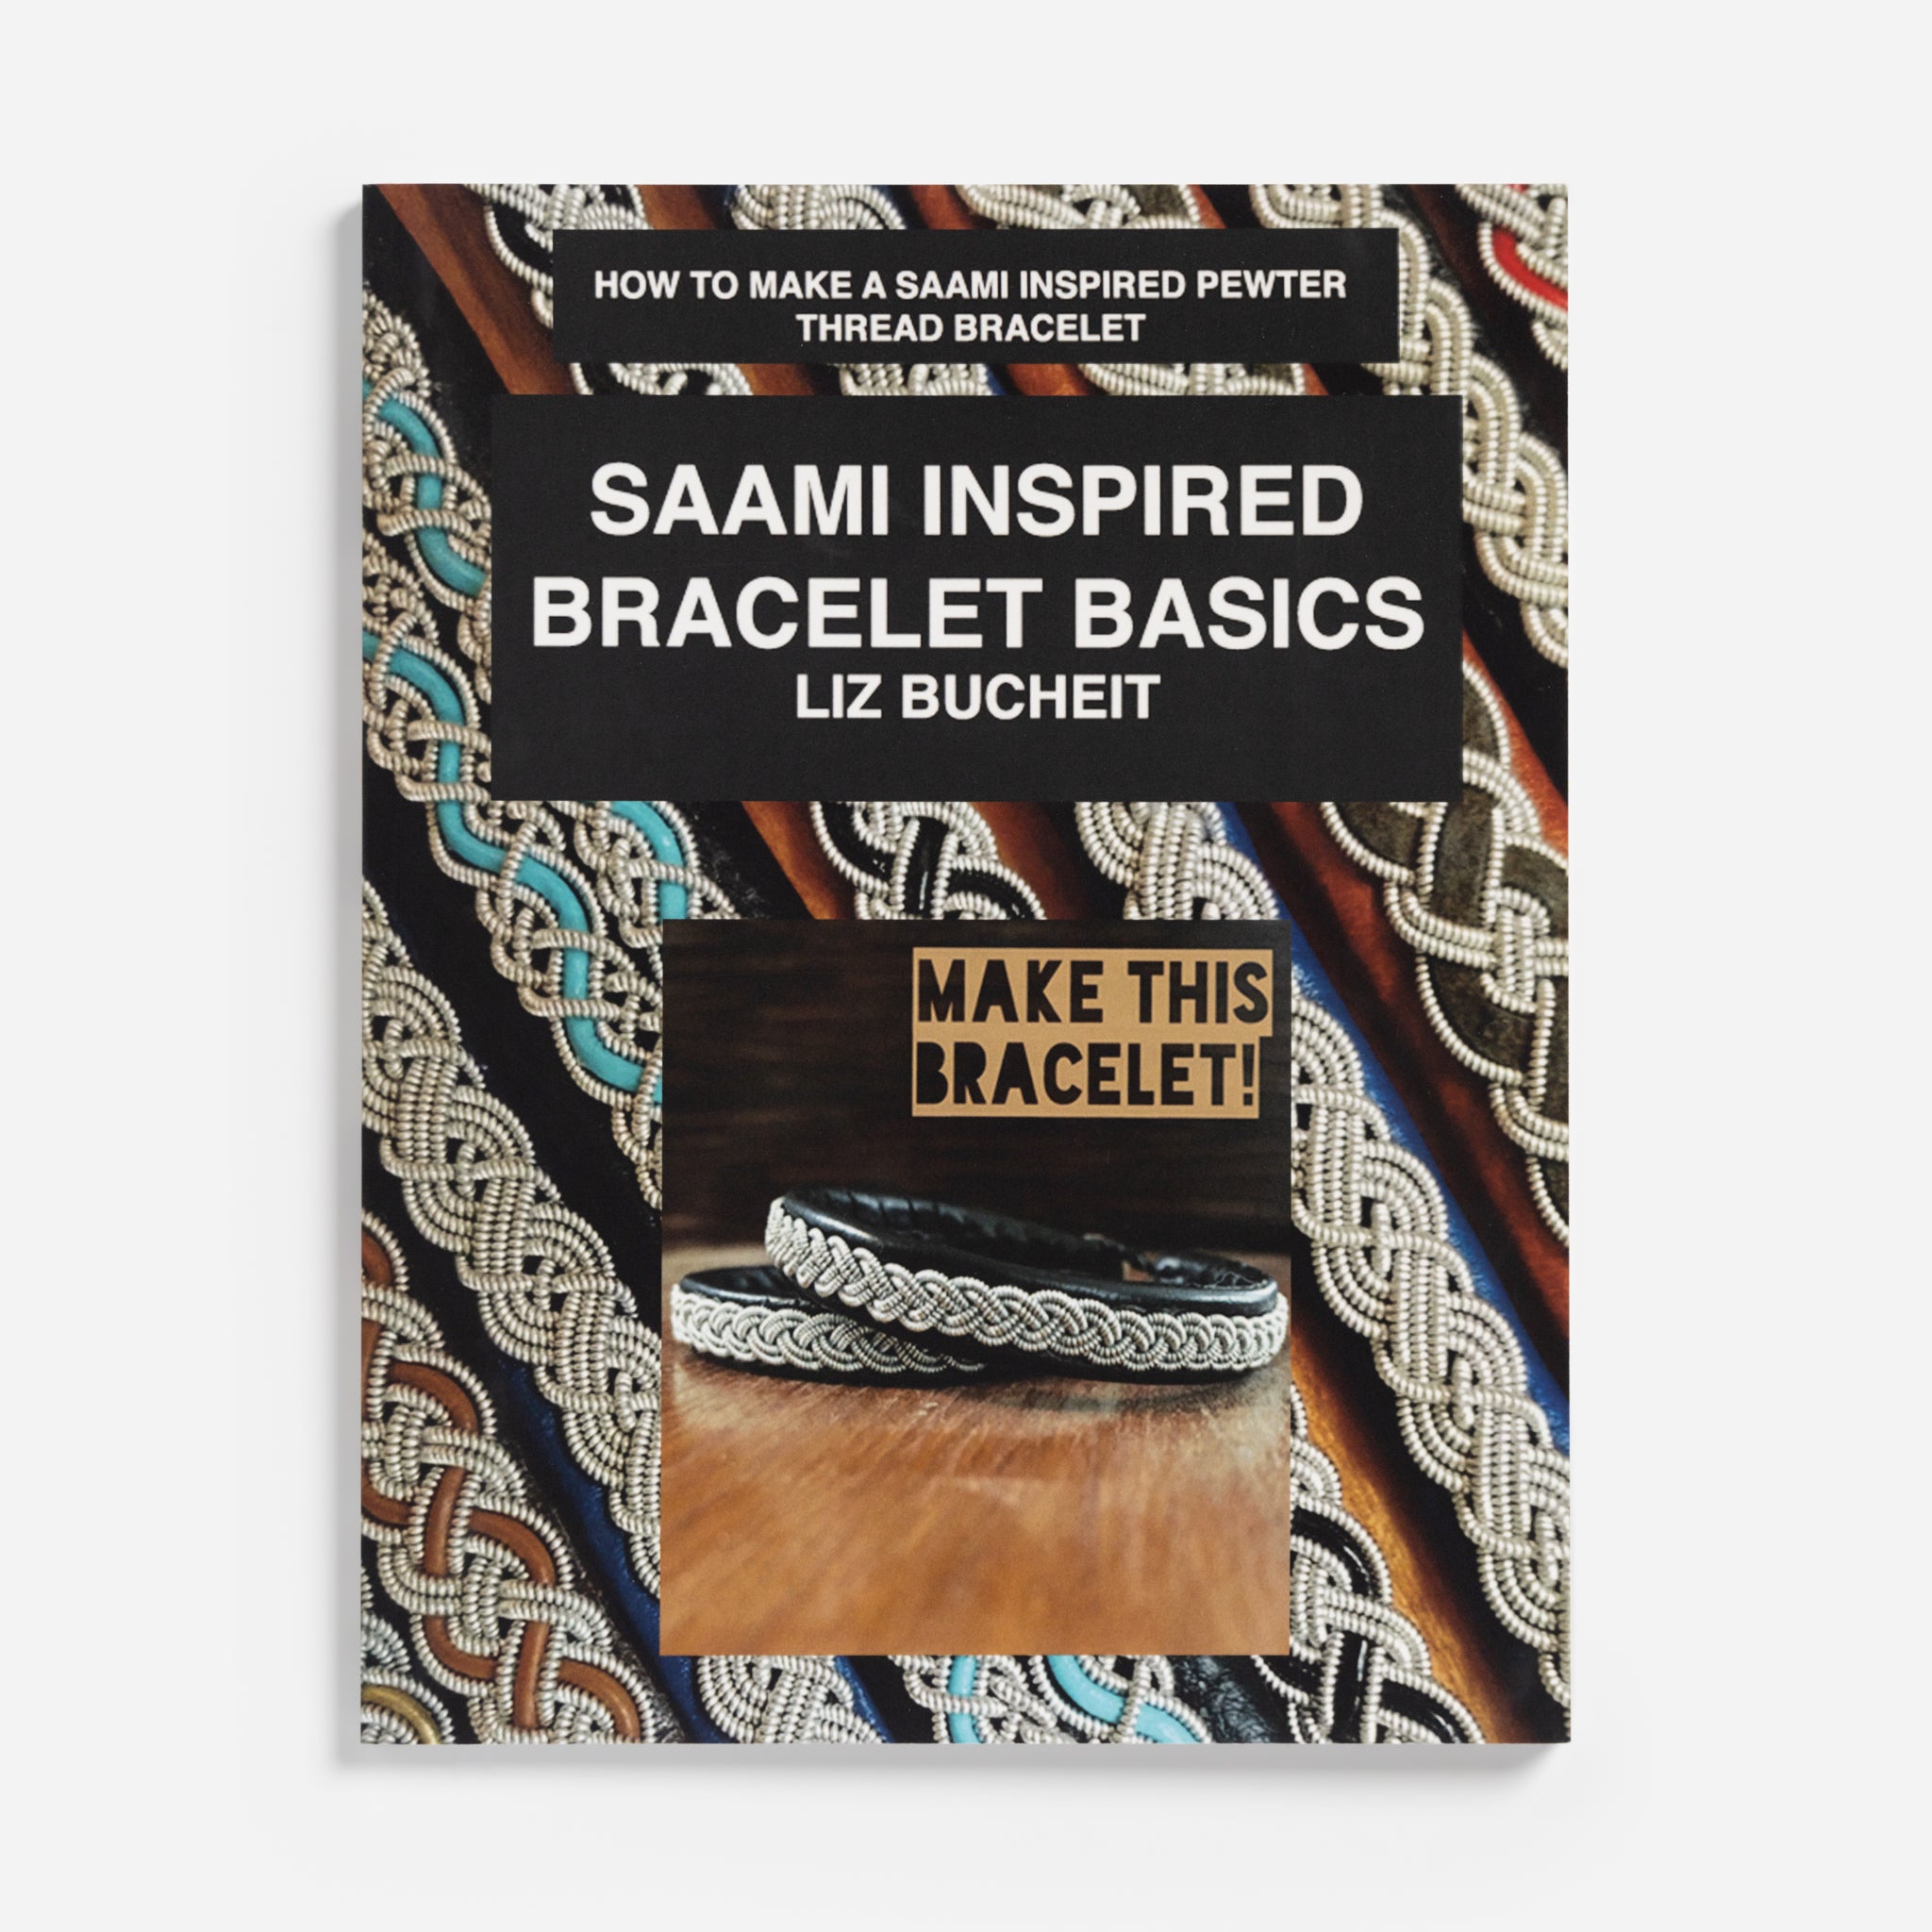 Saami Inspired Bracelet Basics by Liz Bucheit